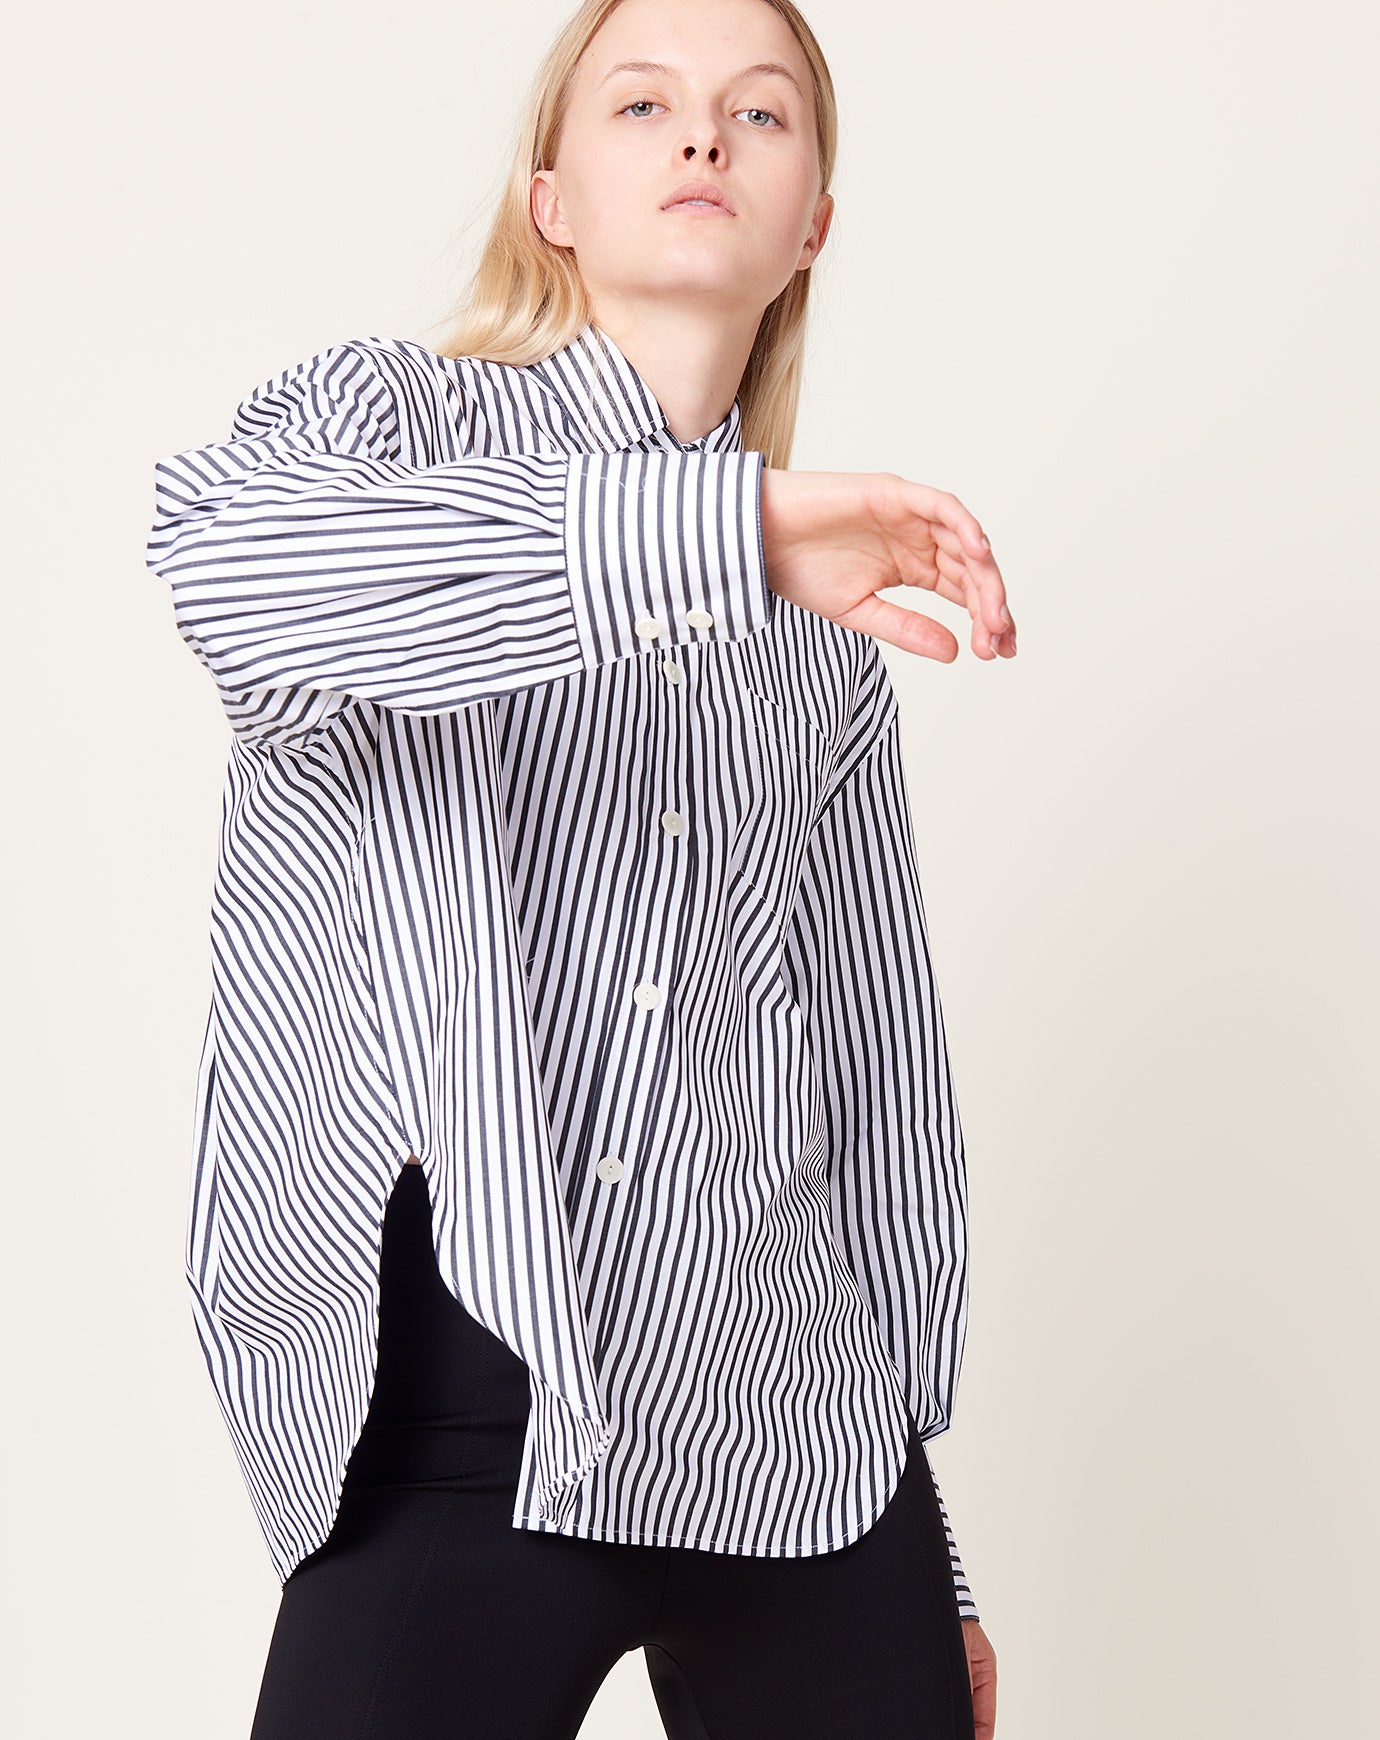 Maria McManus Oversized Shirt in Black & White Stripe